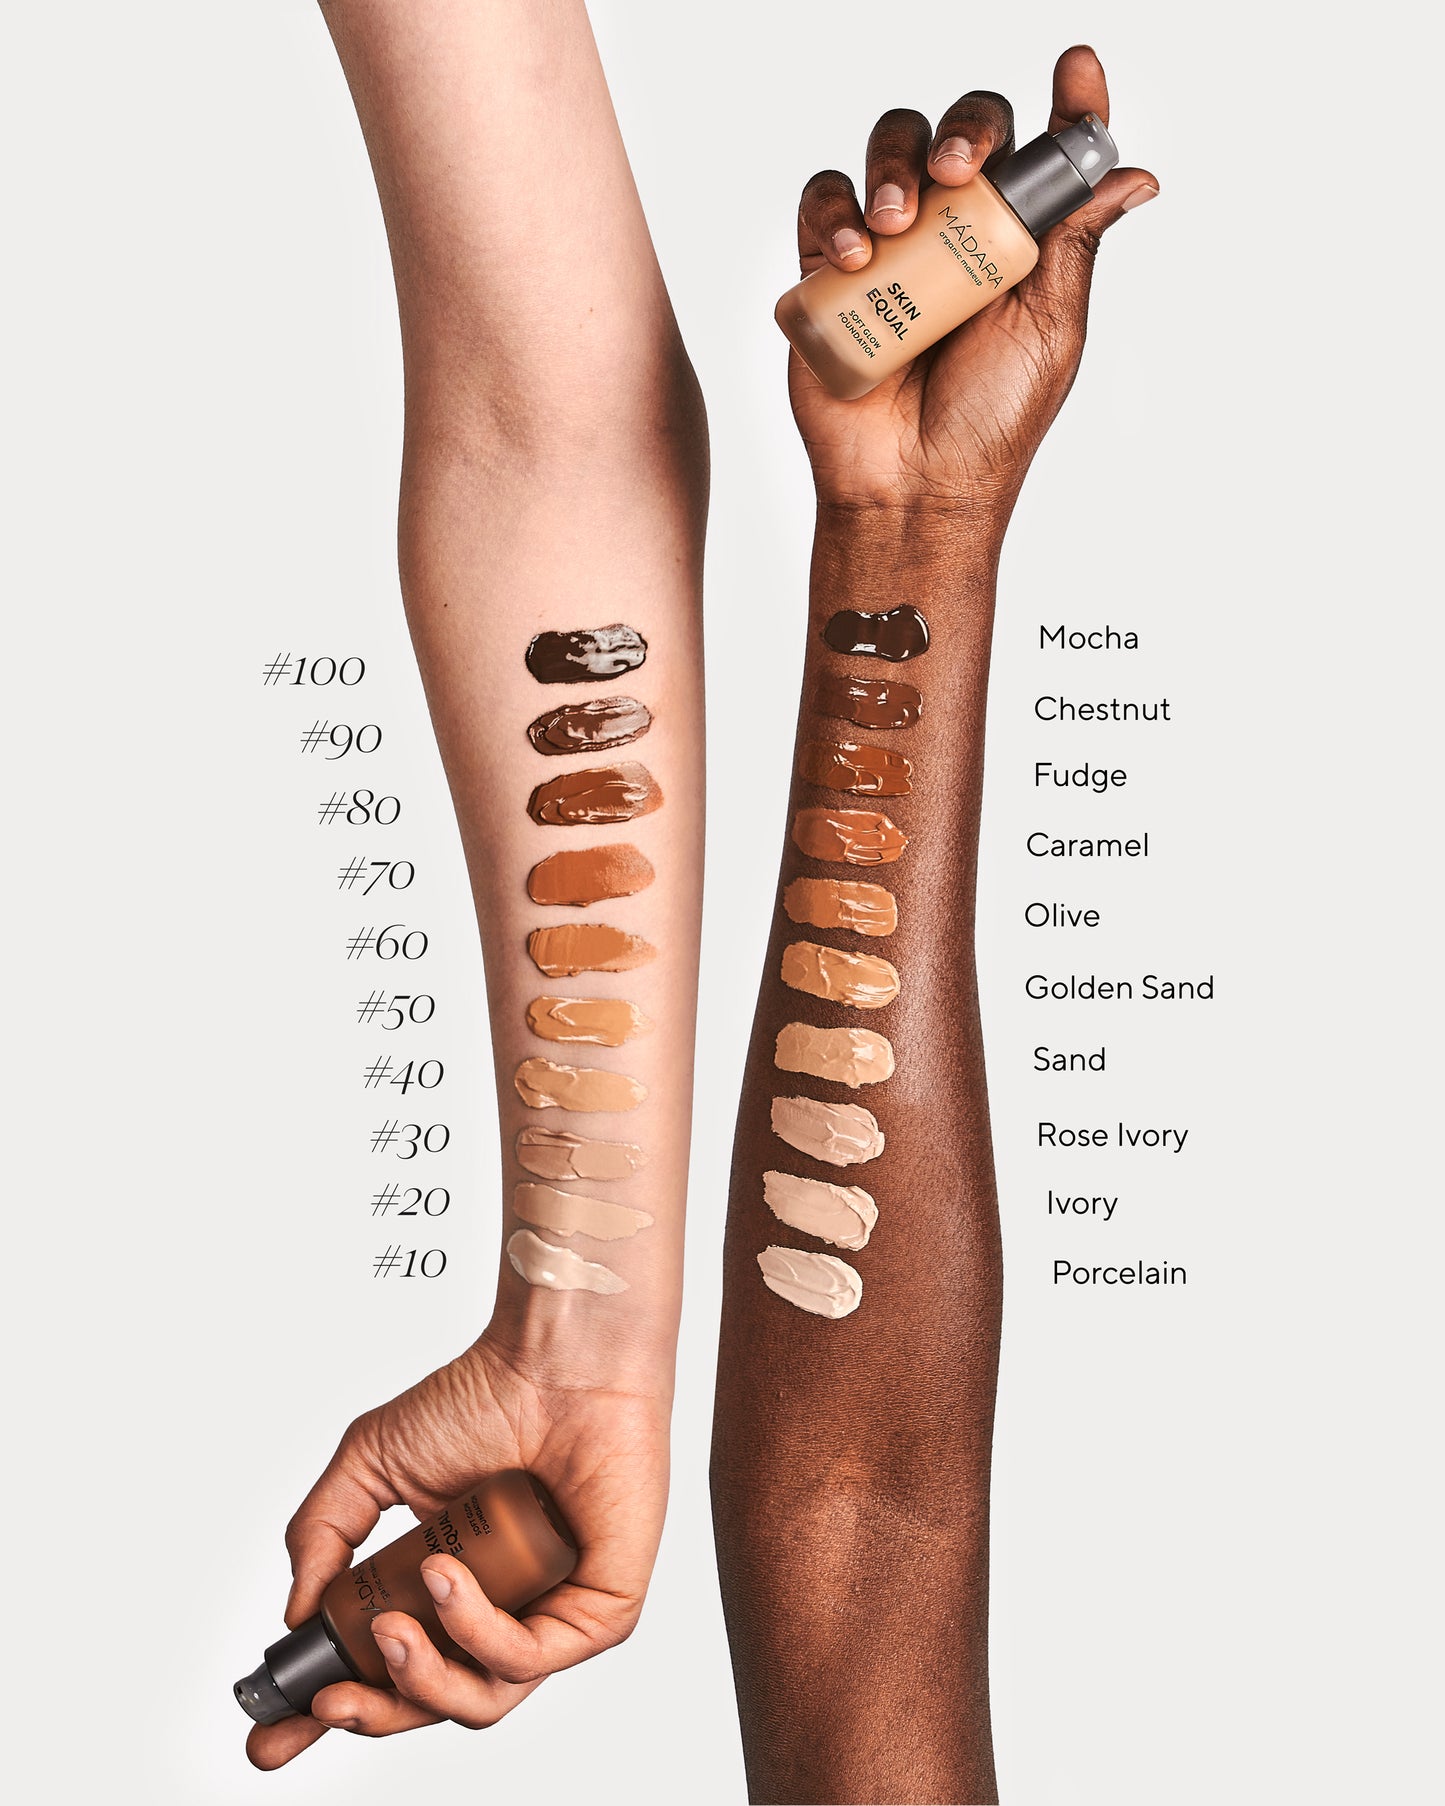 Madara Skin Equal Foundation #20 Ivory, 30 ml